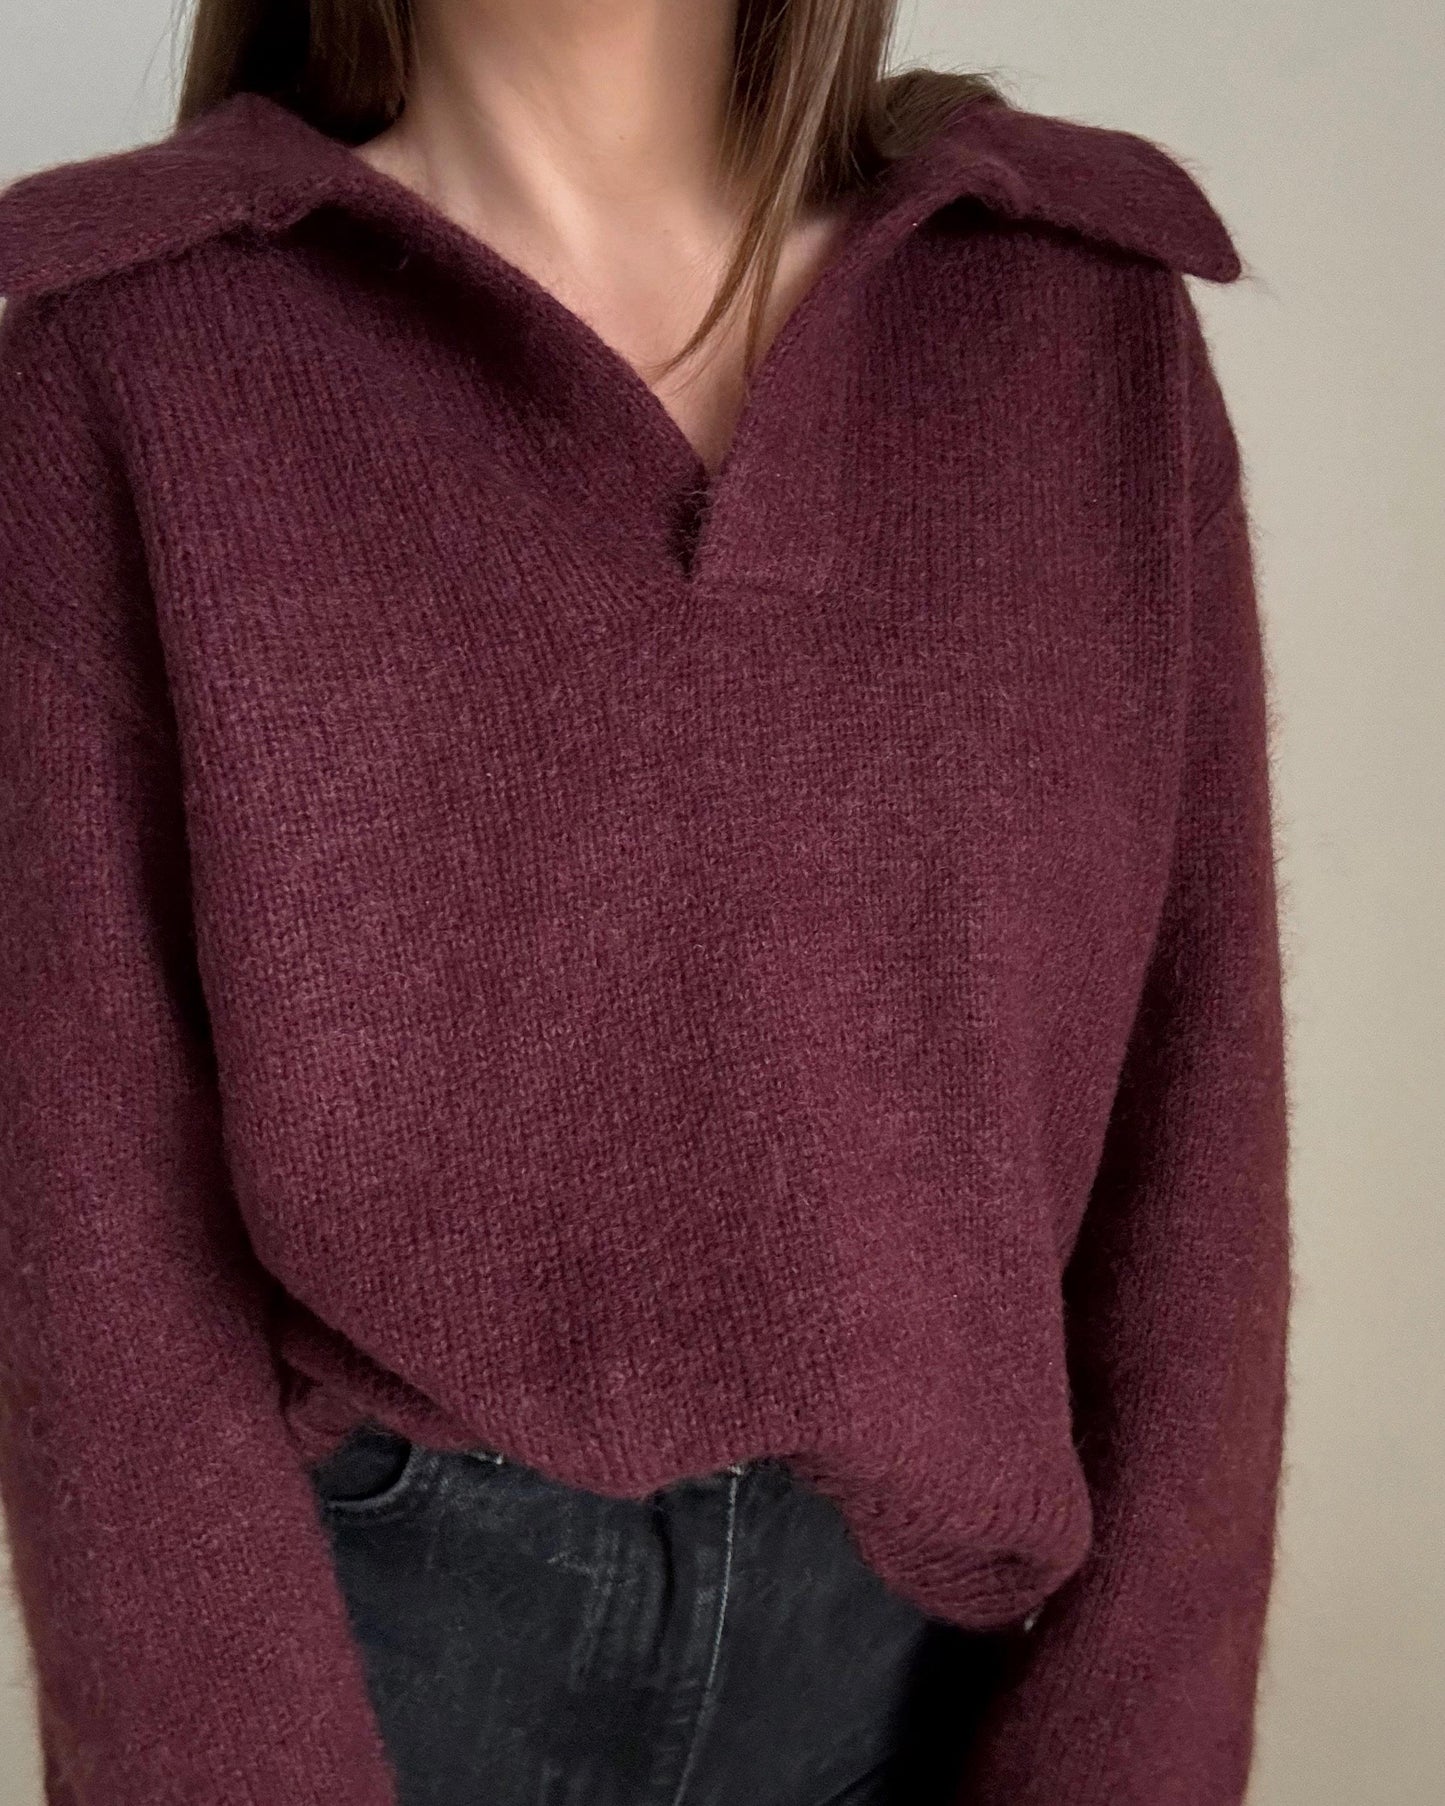 DIY polo sweater knitting pattern - stylish and modern look